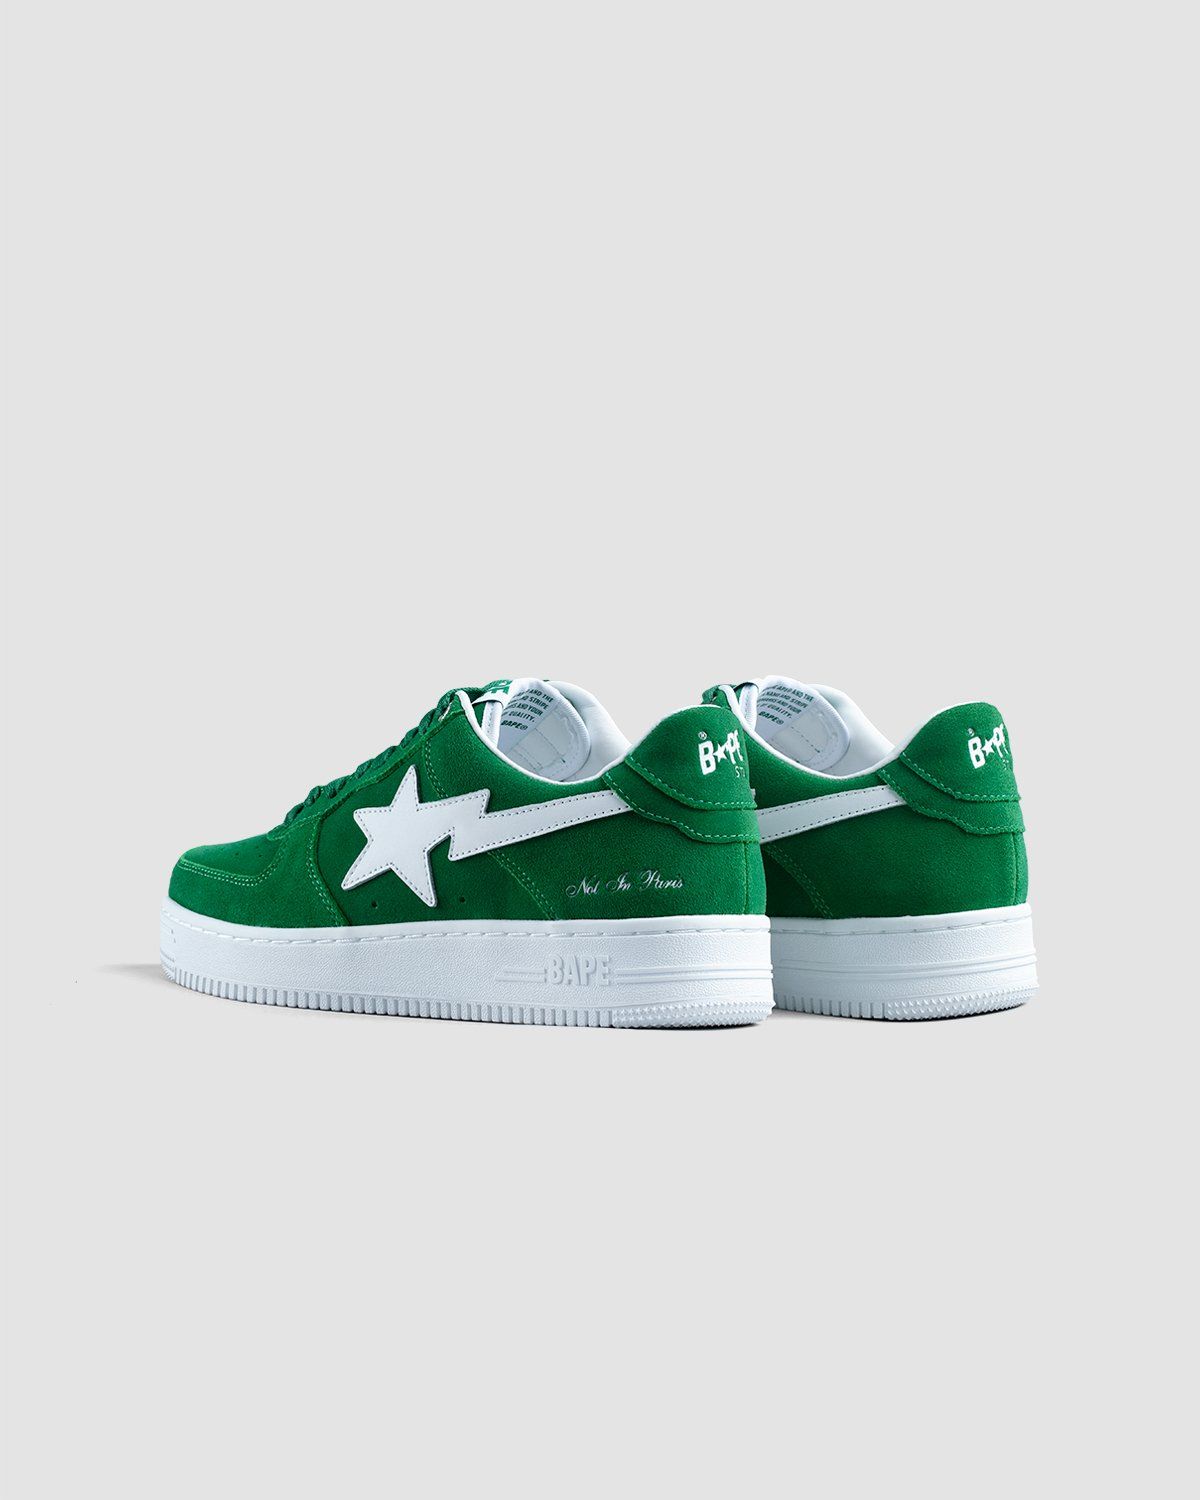 BAPE x Highsnobiety – BAPE STA Green - Sneakers - Green - Image 3